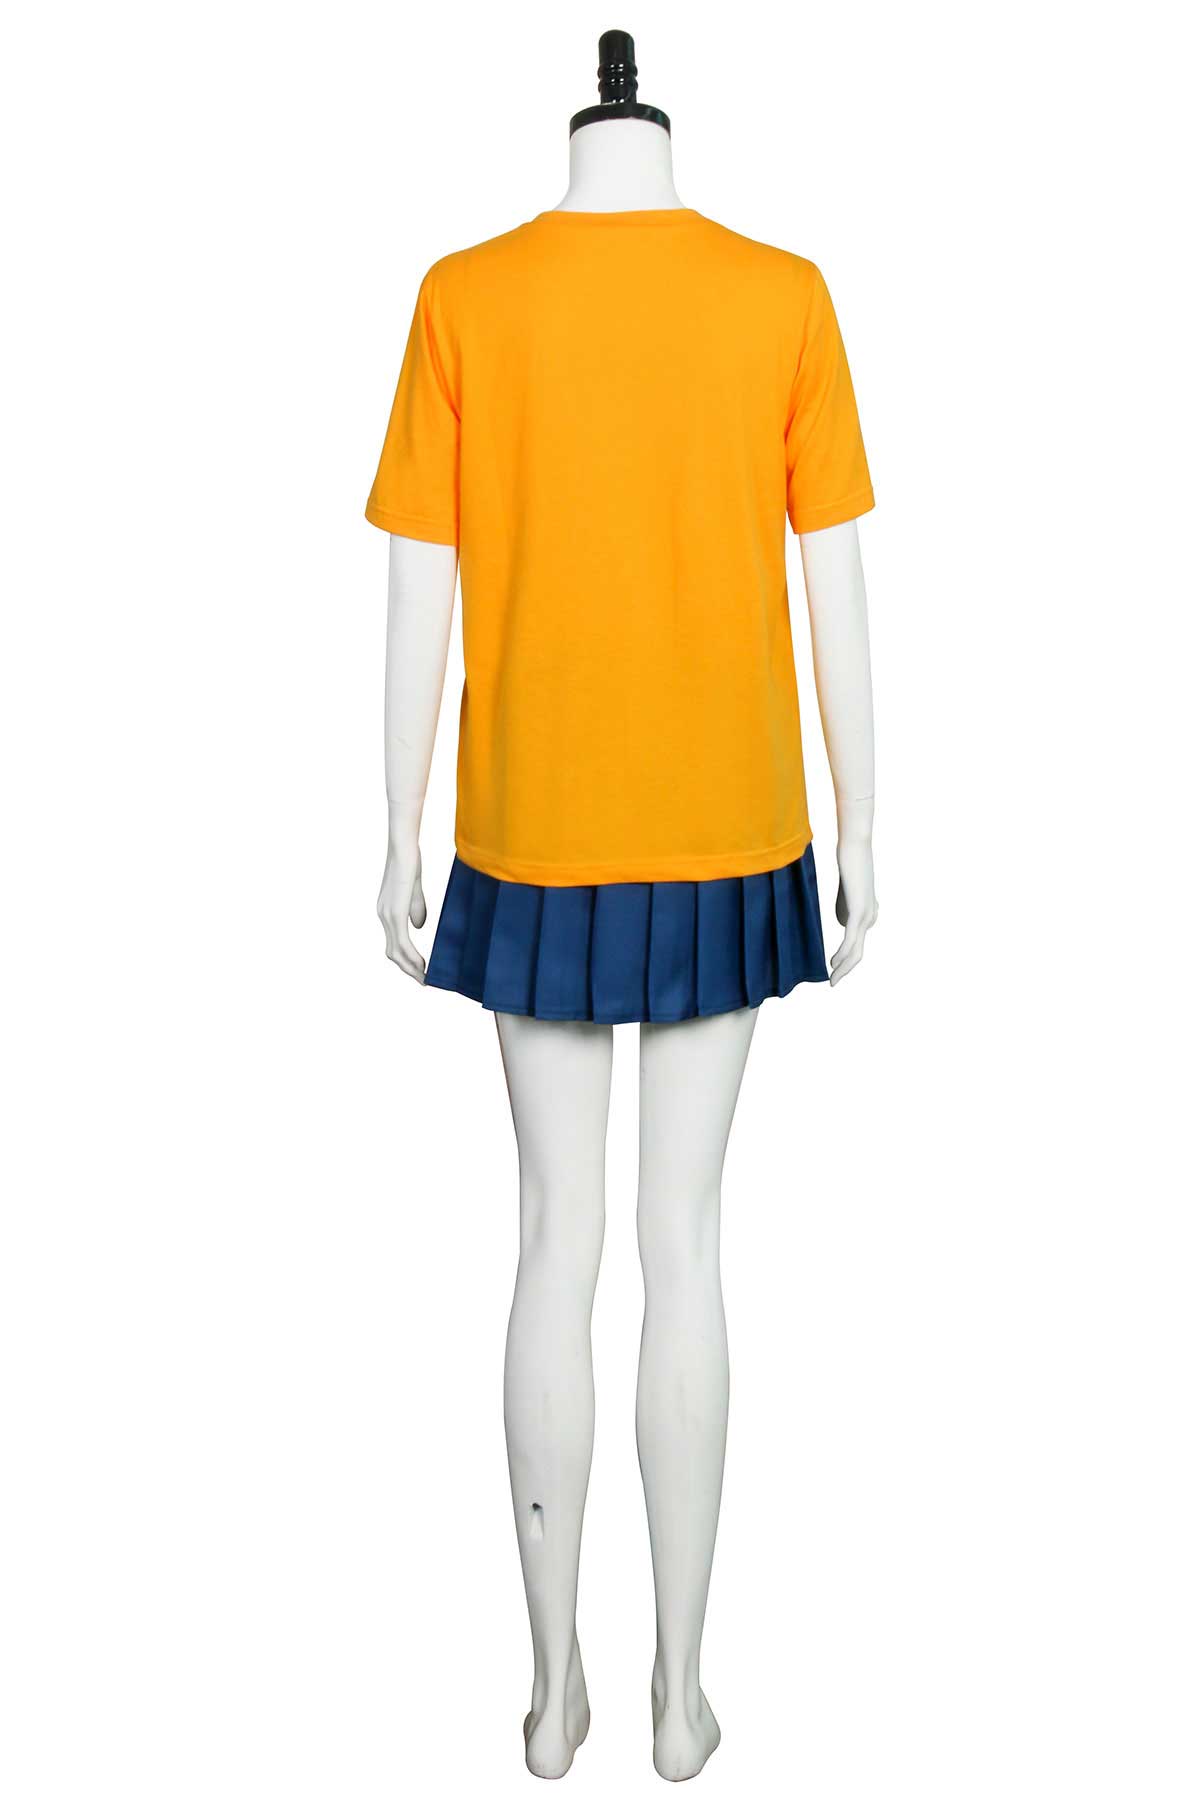 Uraraka Ochako Cosplay Costume Anime My Hero Academia Season 4 Tsuyu School Uniform Outfit-Takerlama